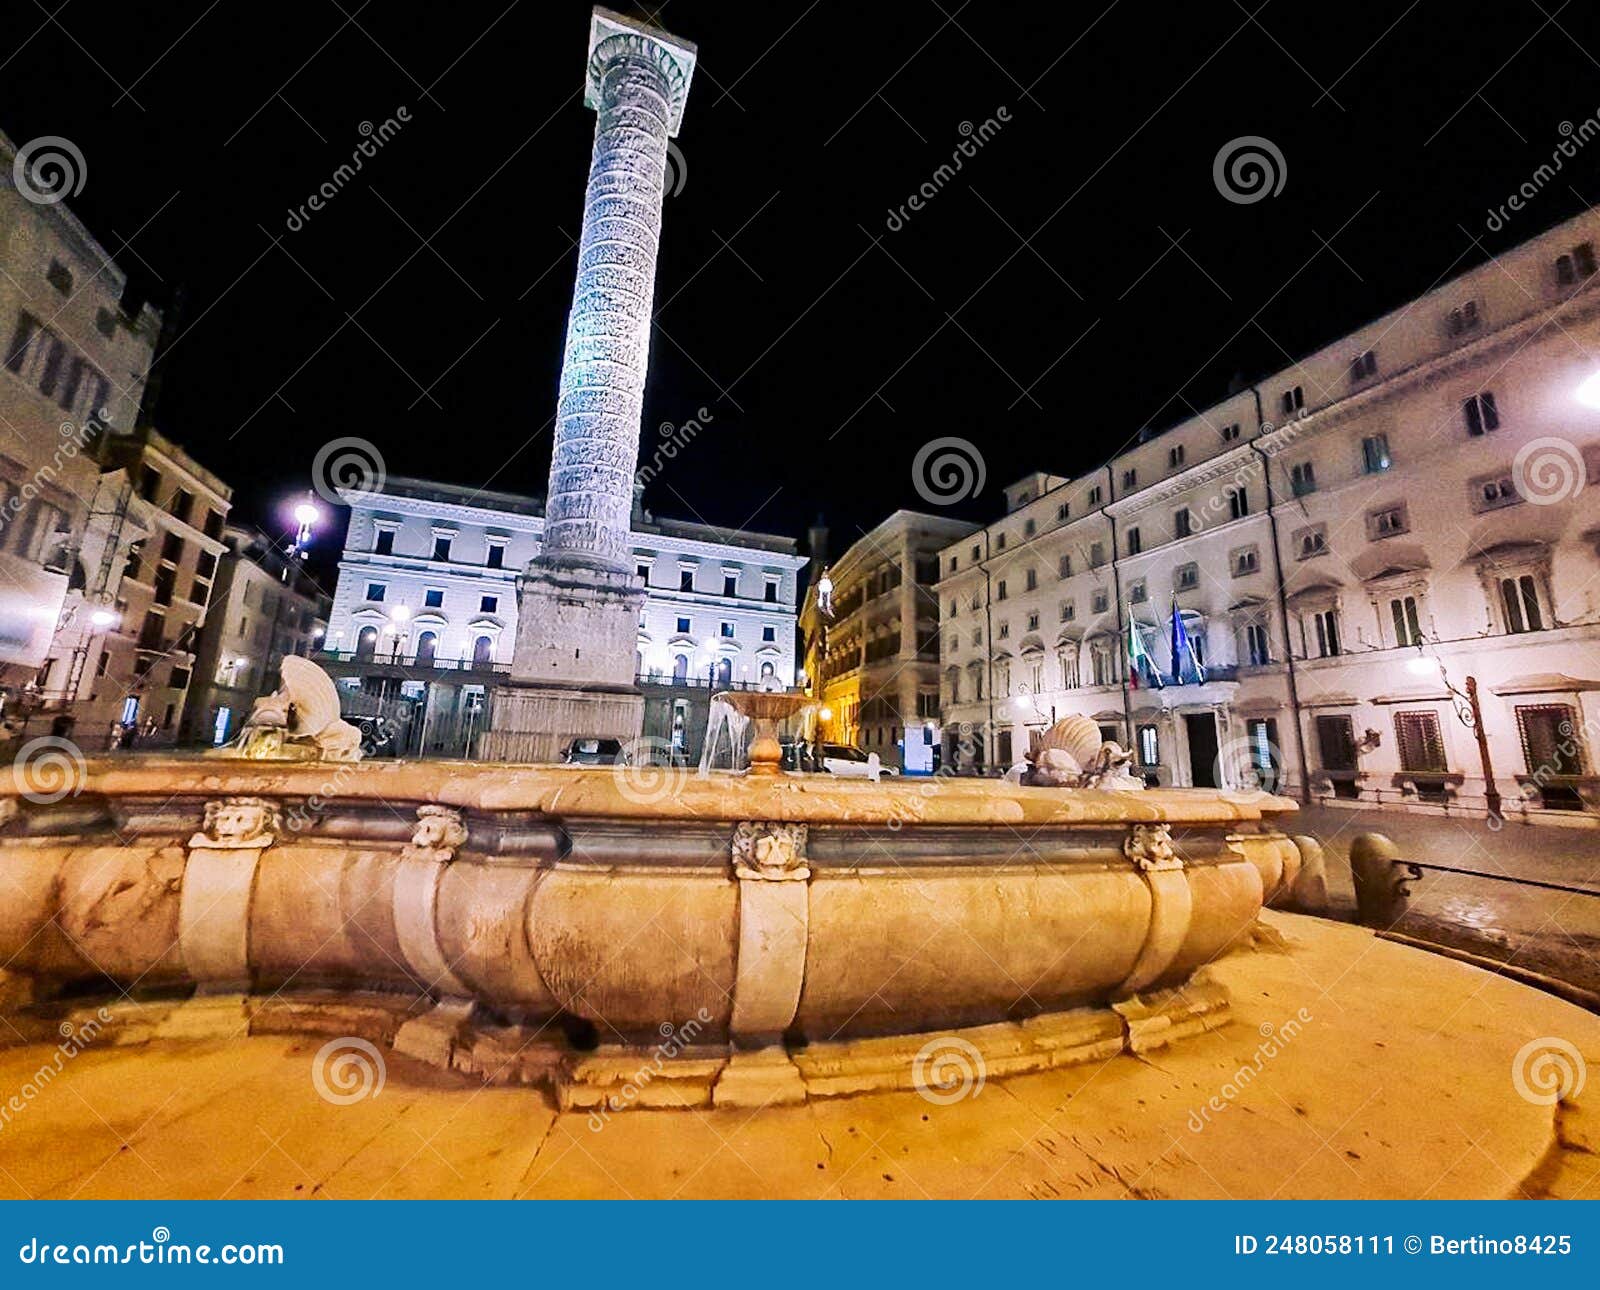 parliament square in rome